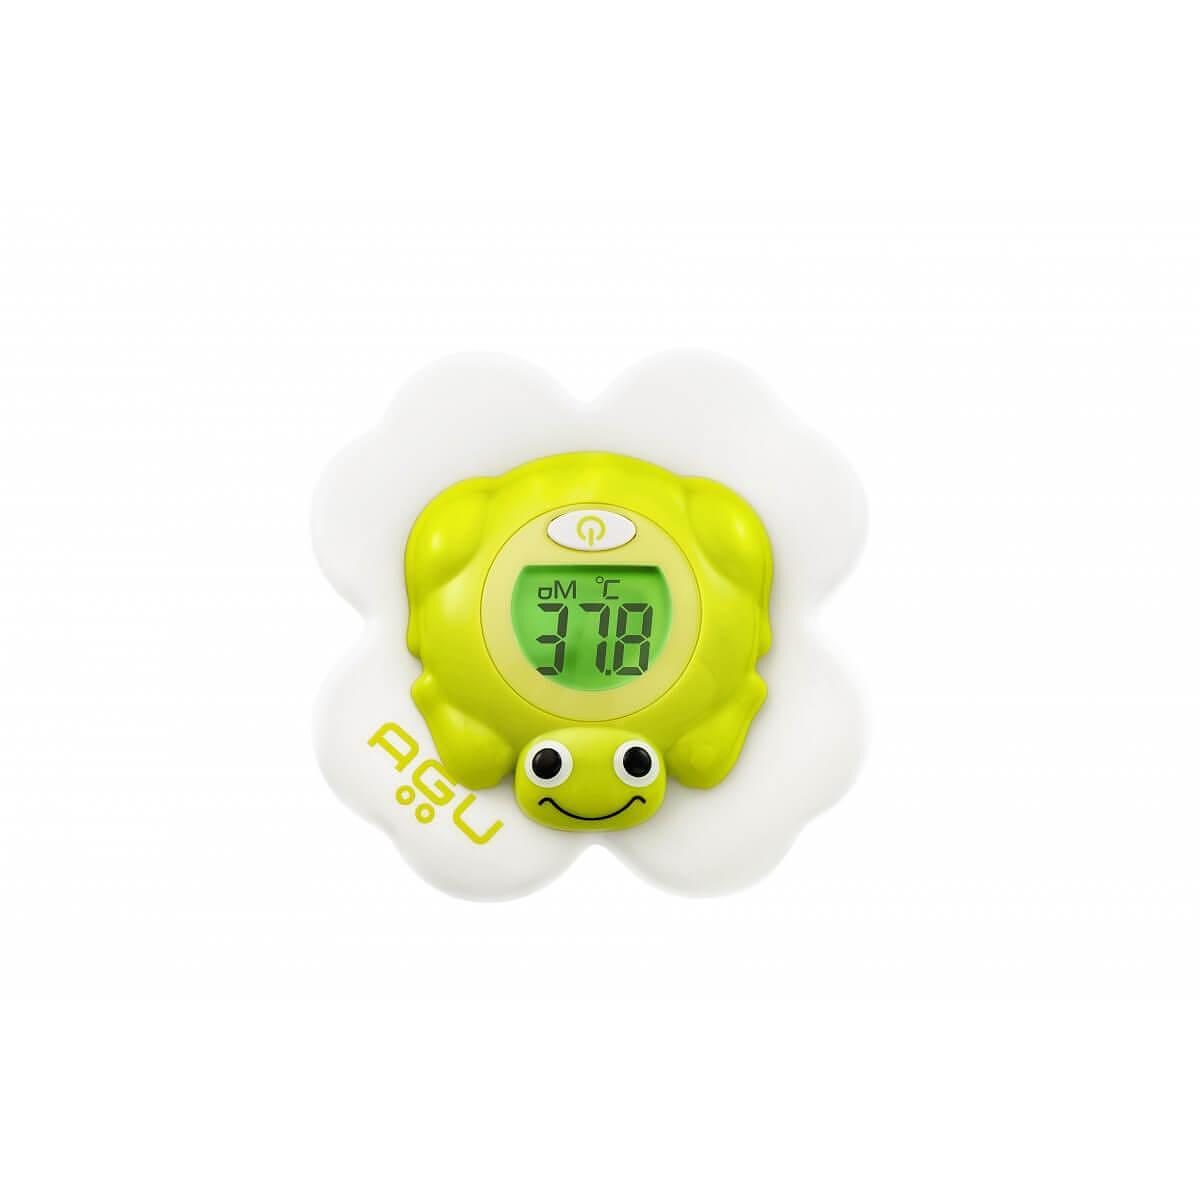 Термометър за вана AGU Froggy